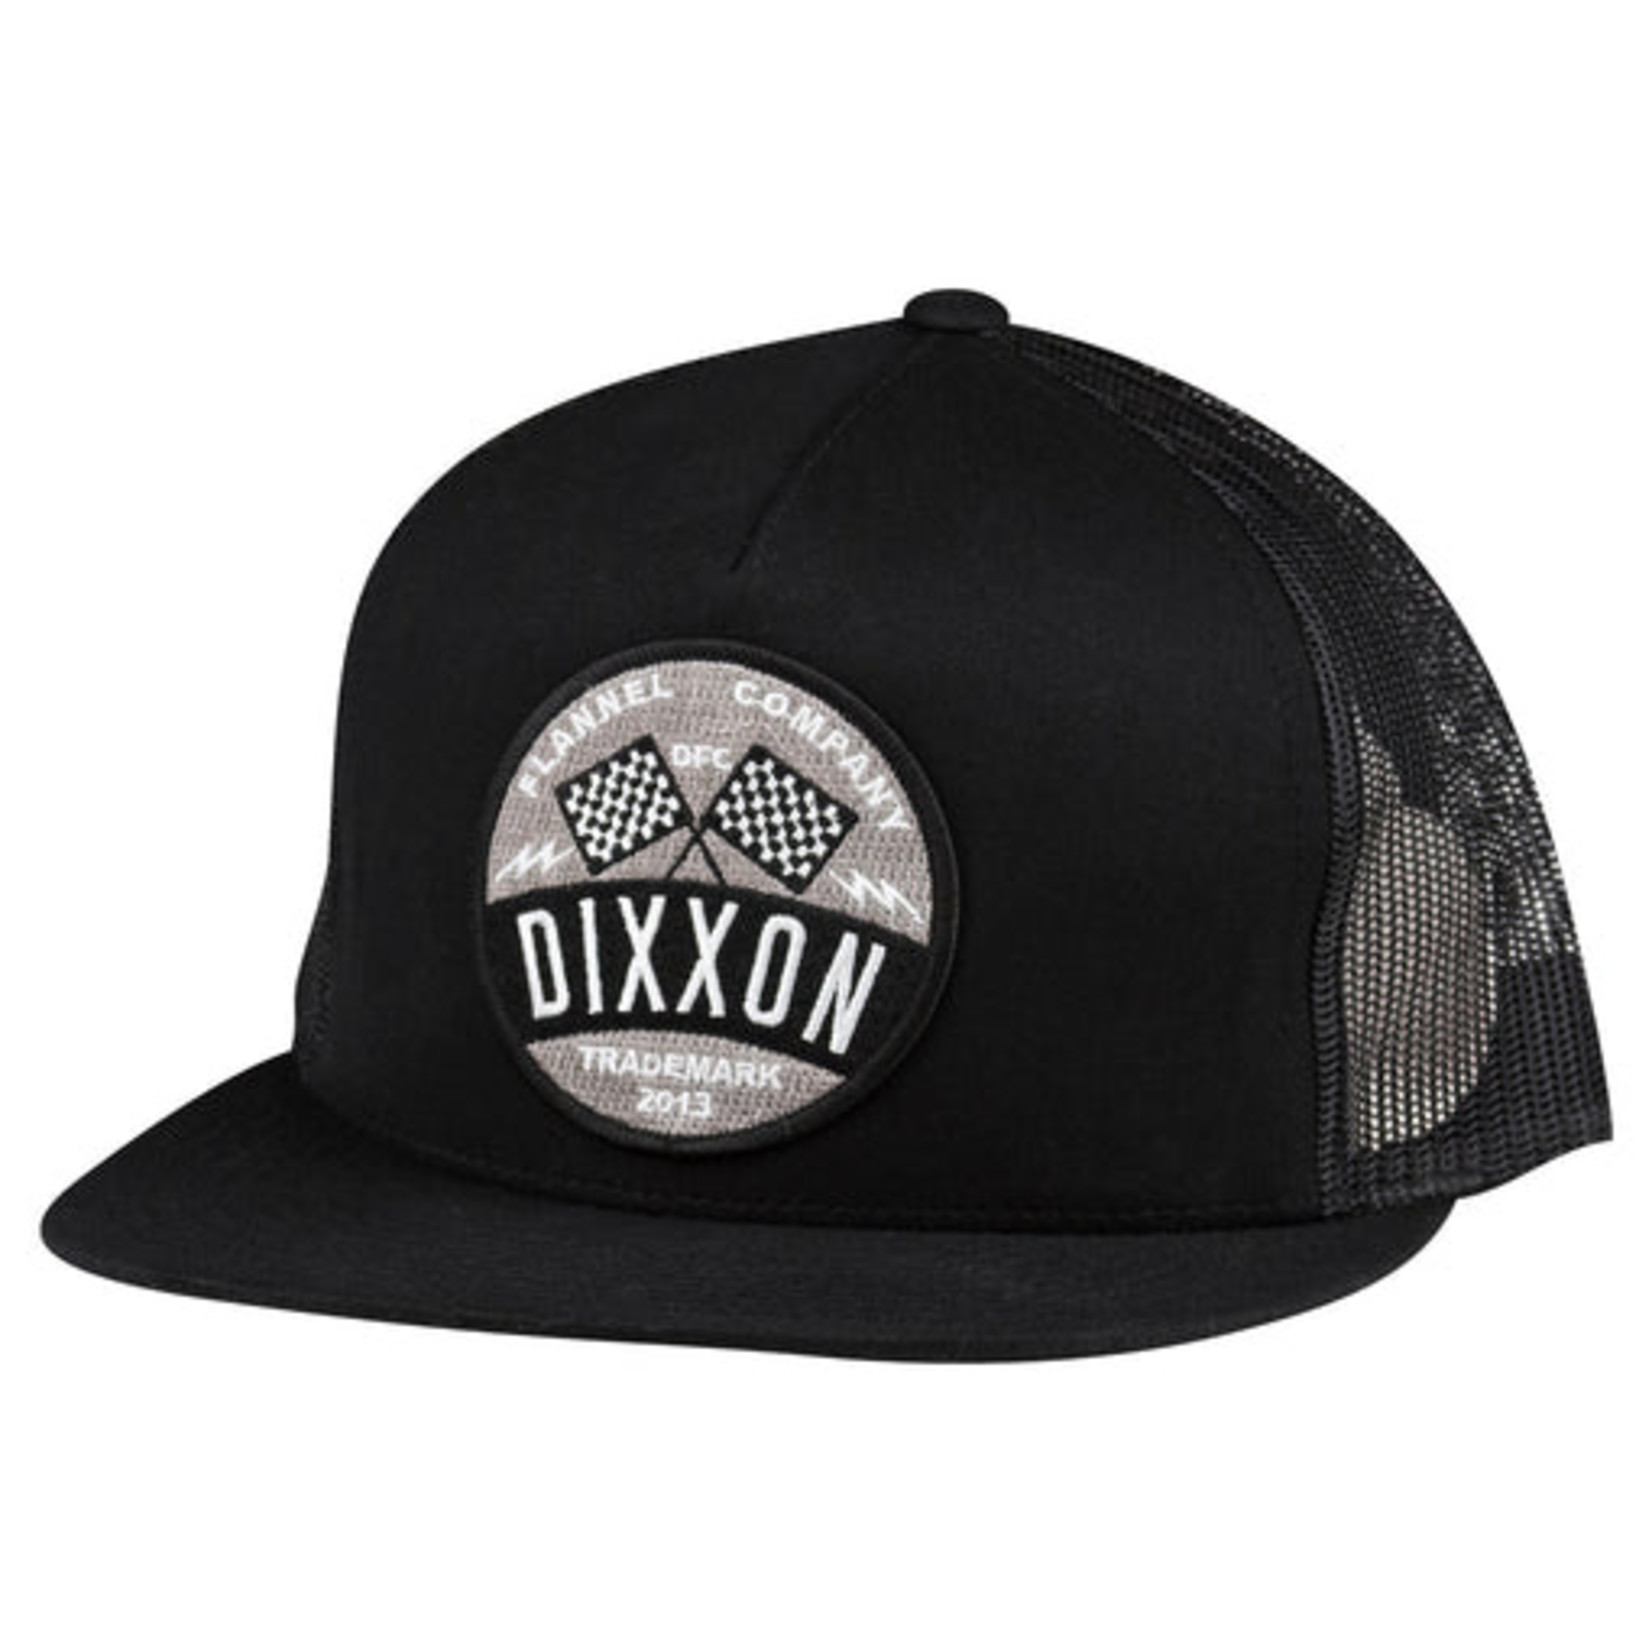 Dixxon DIXXON TRACKER HAT BLACK